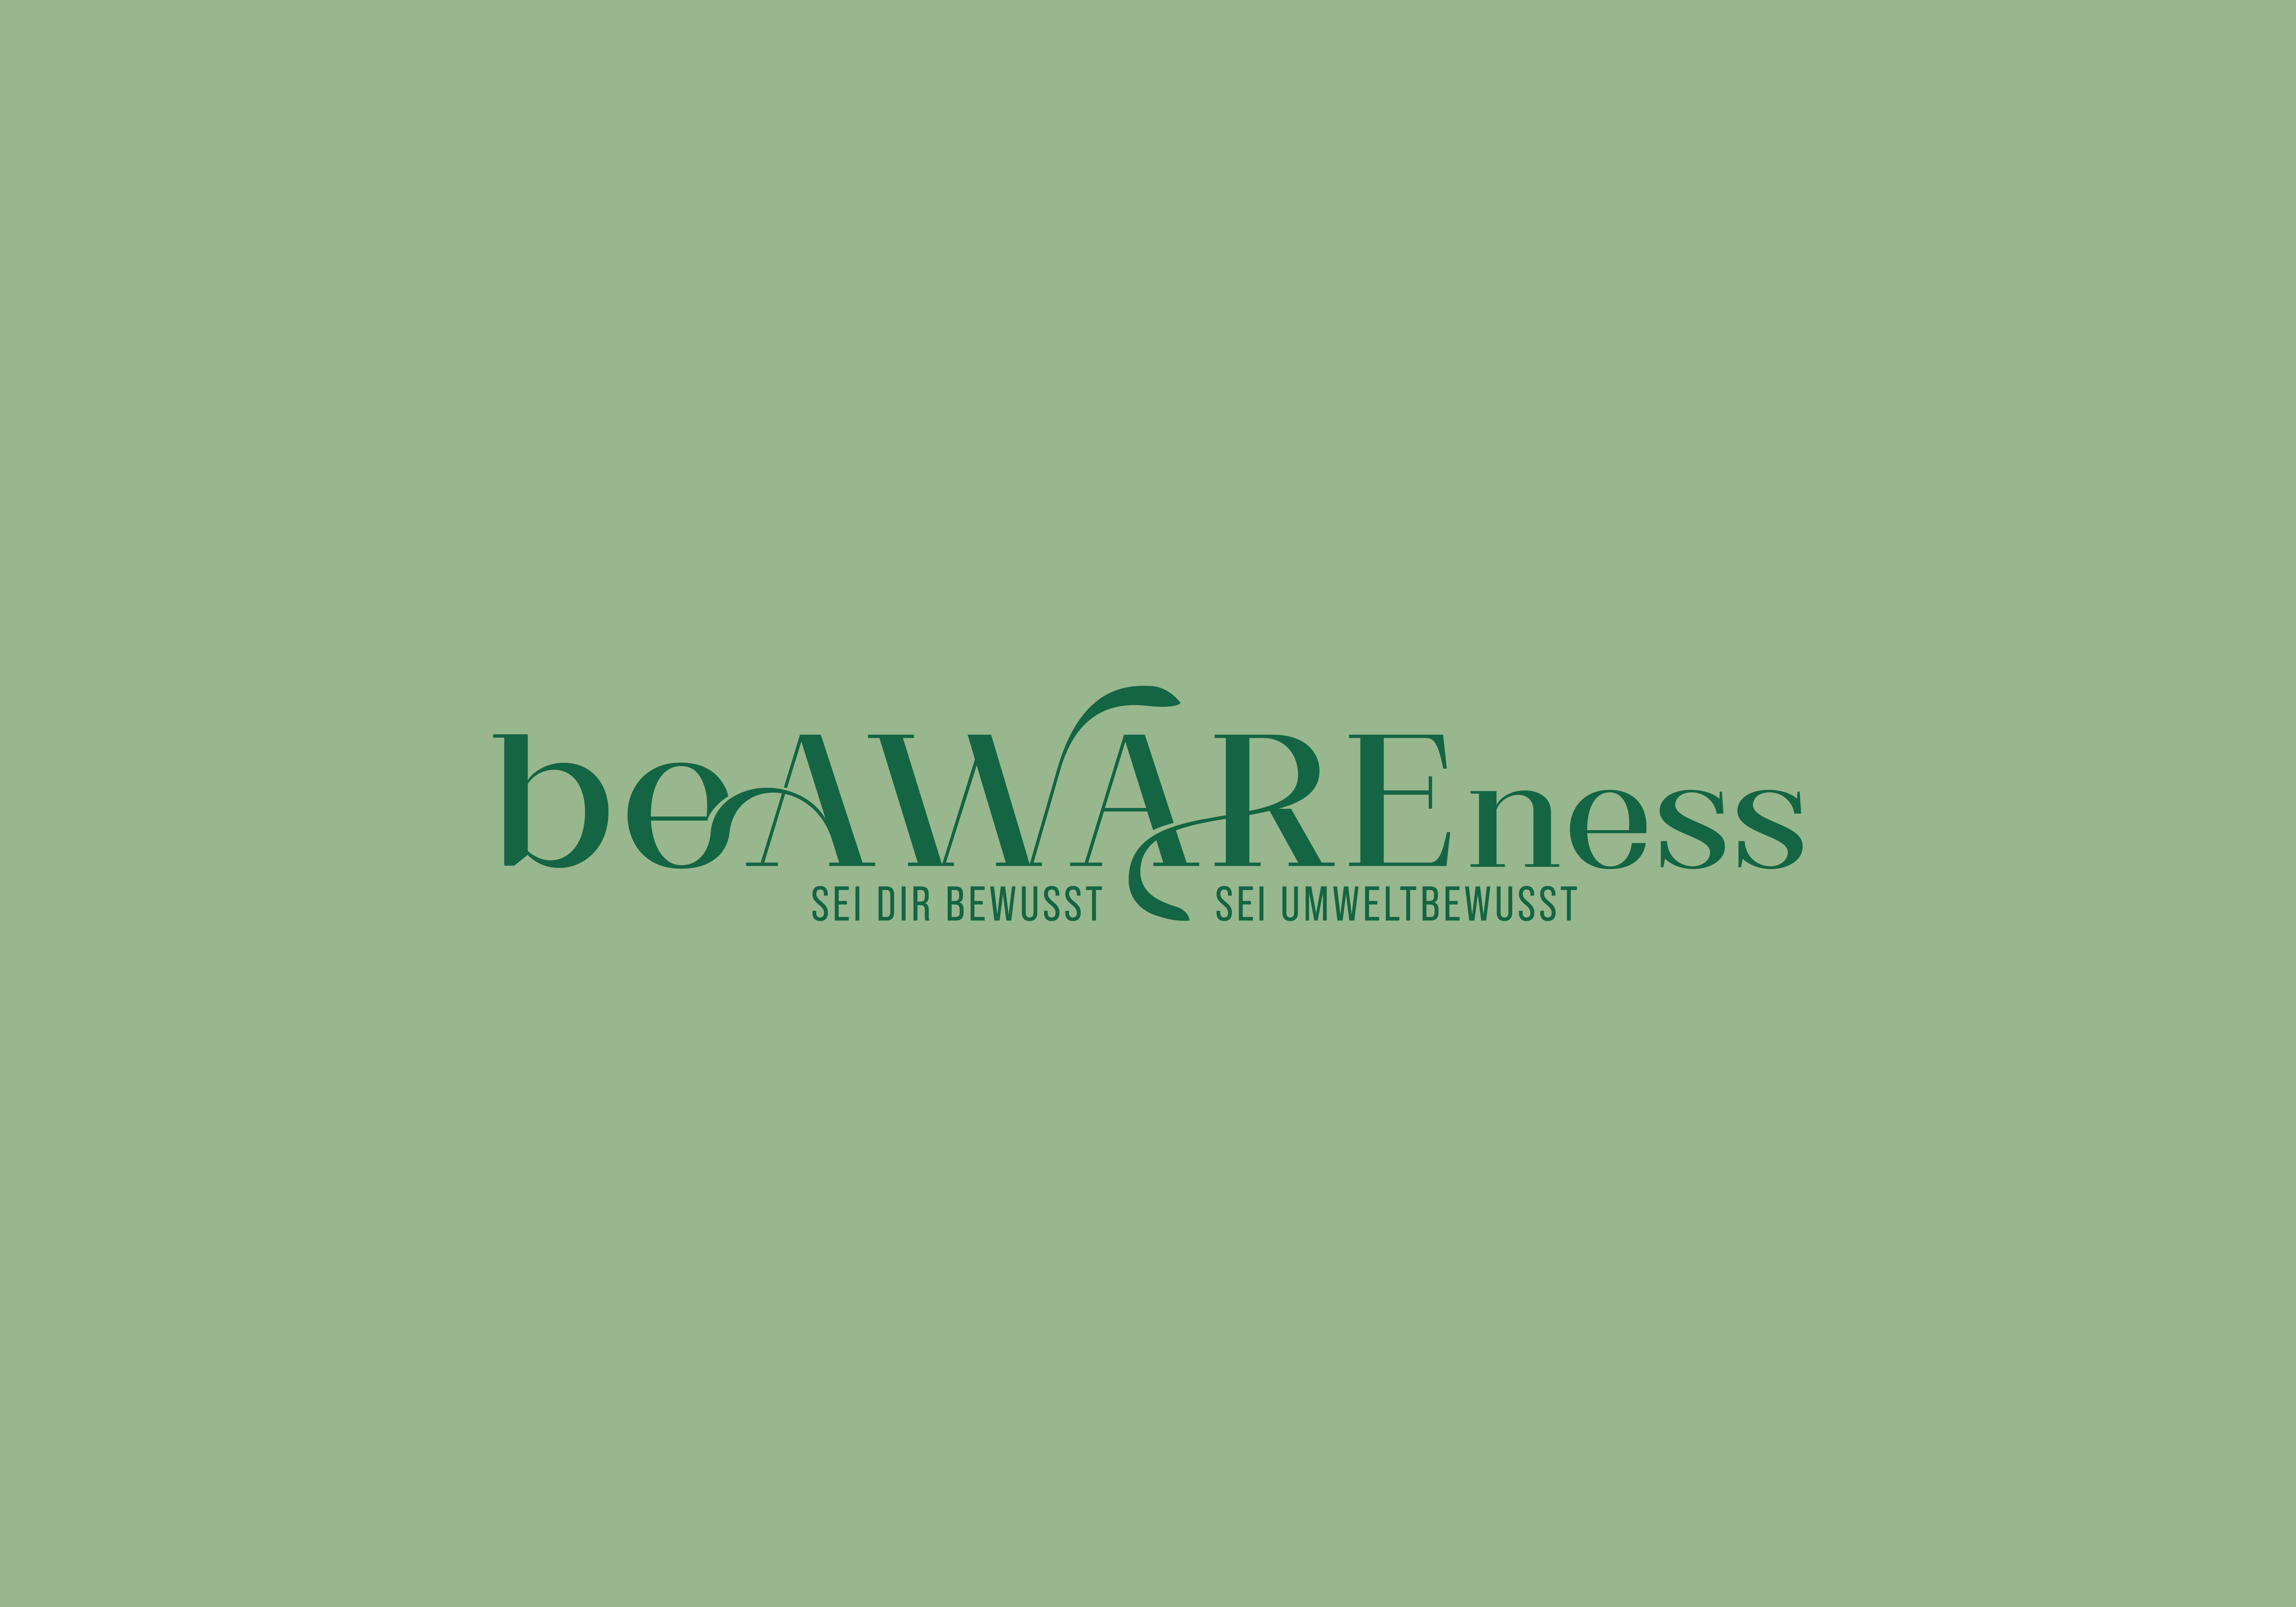 Das Logo aus dem Corporate Design von Be Awareness